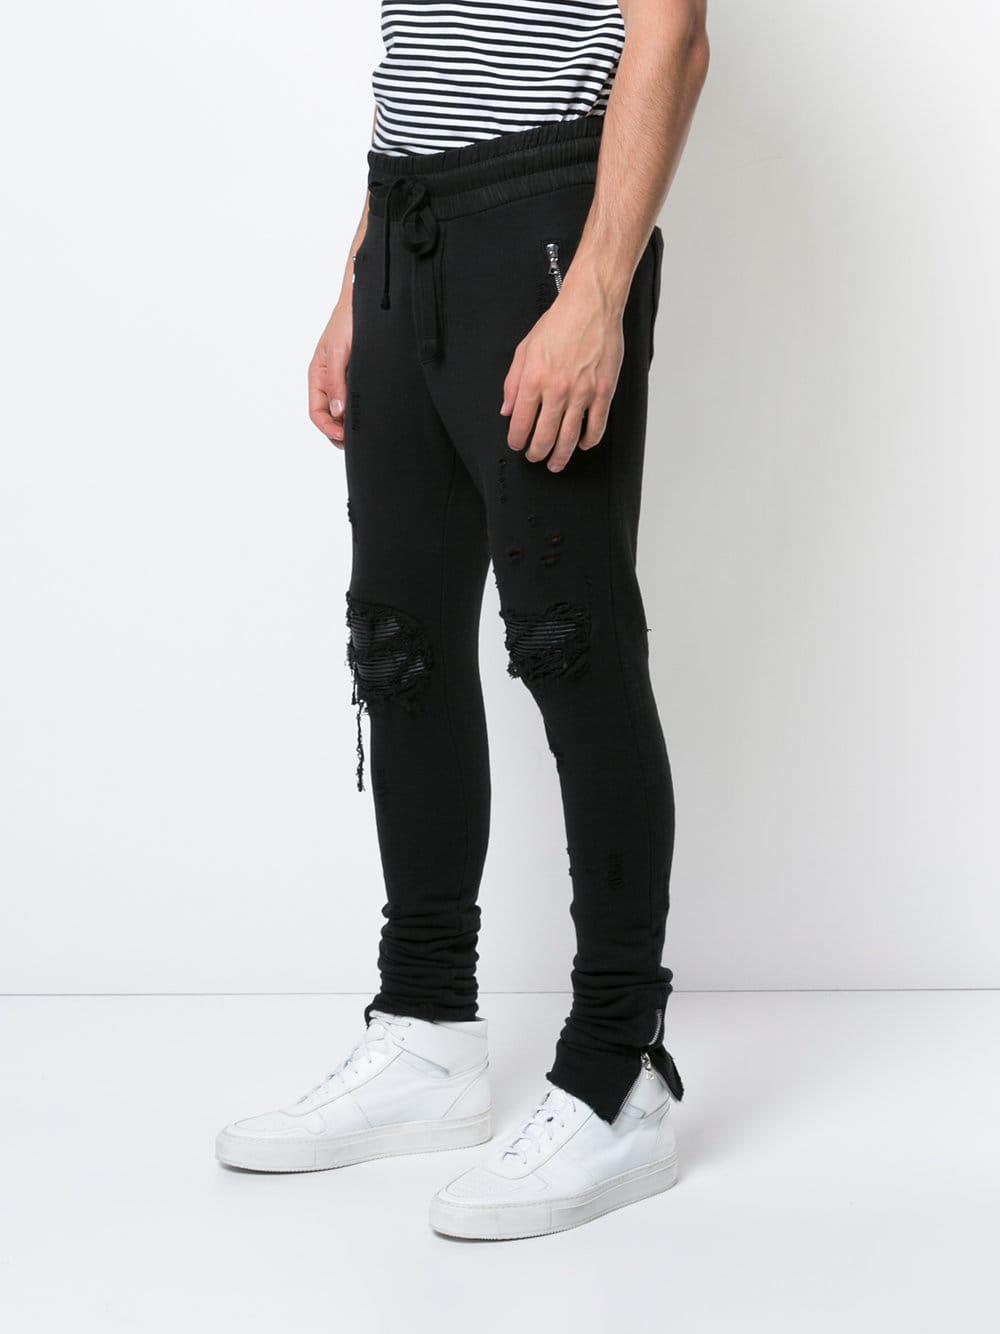 Amiri Cotton Mx1 Sweatpants in Black for Men - Lyst